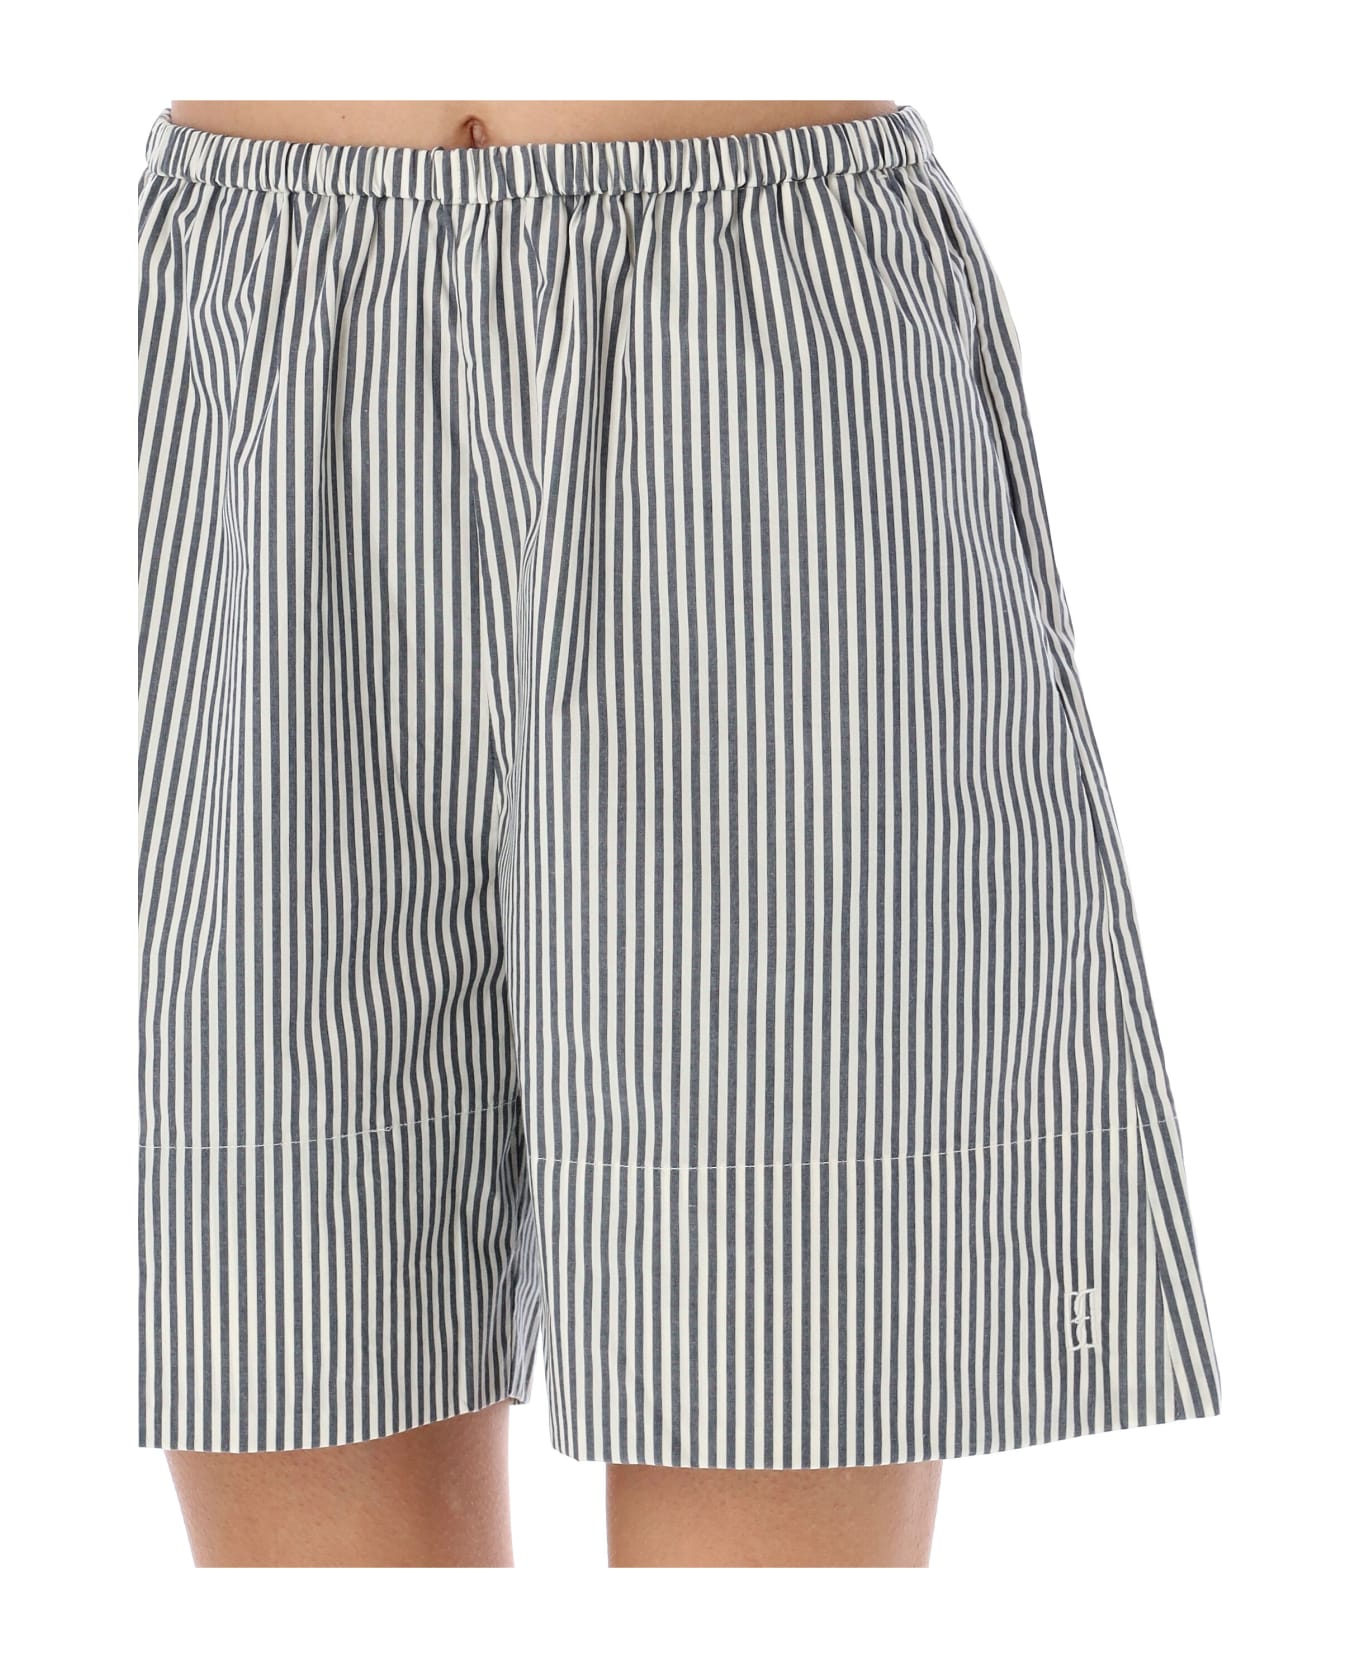 By Malene Birger Siona Striped Shorts - NAVY STRIPES